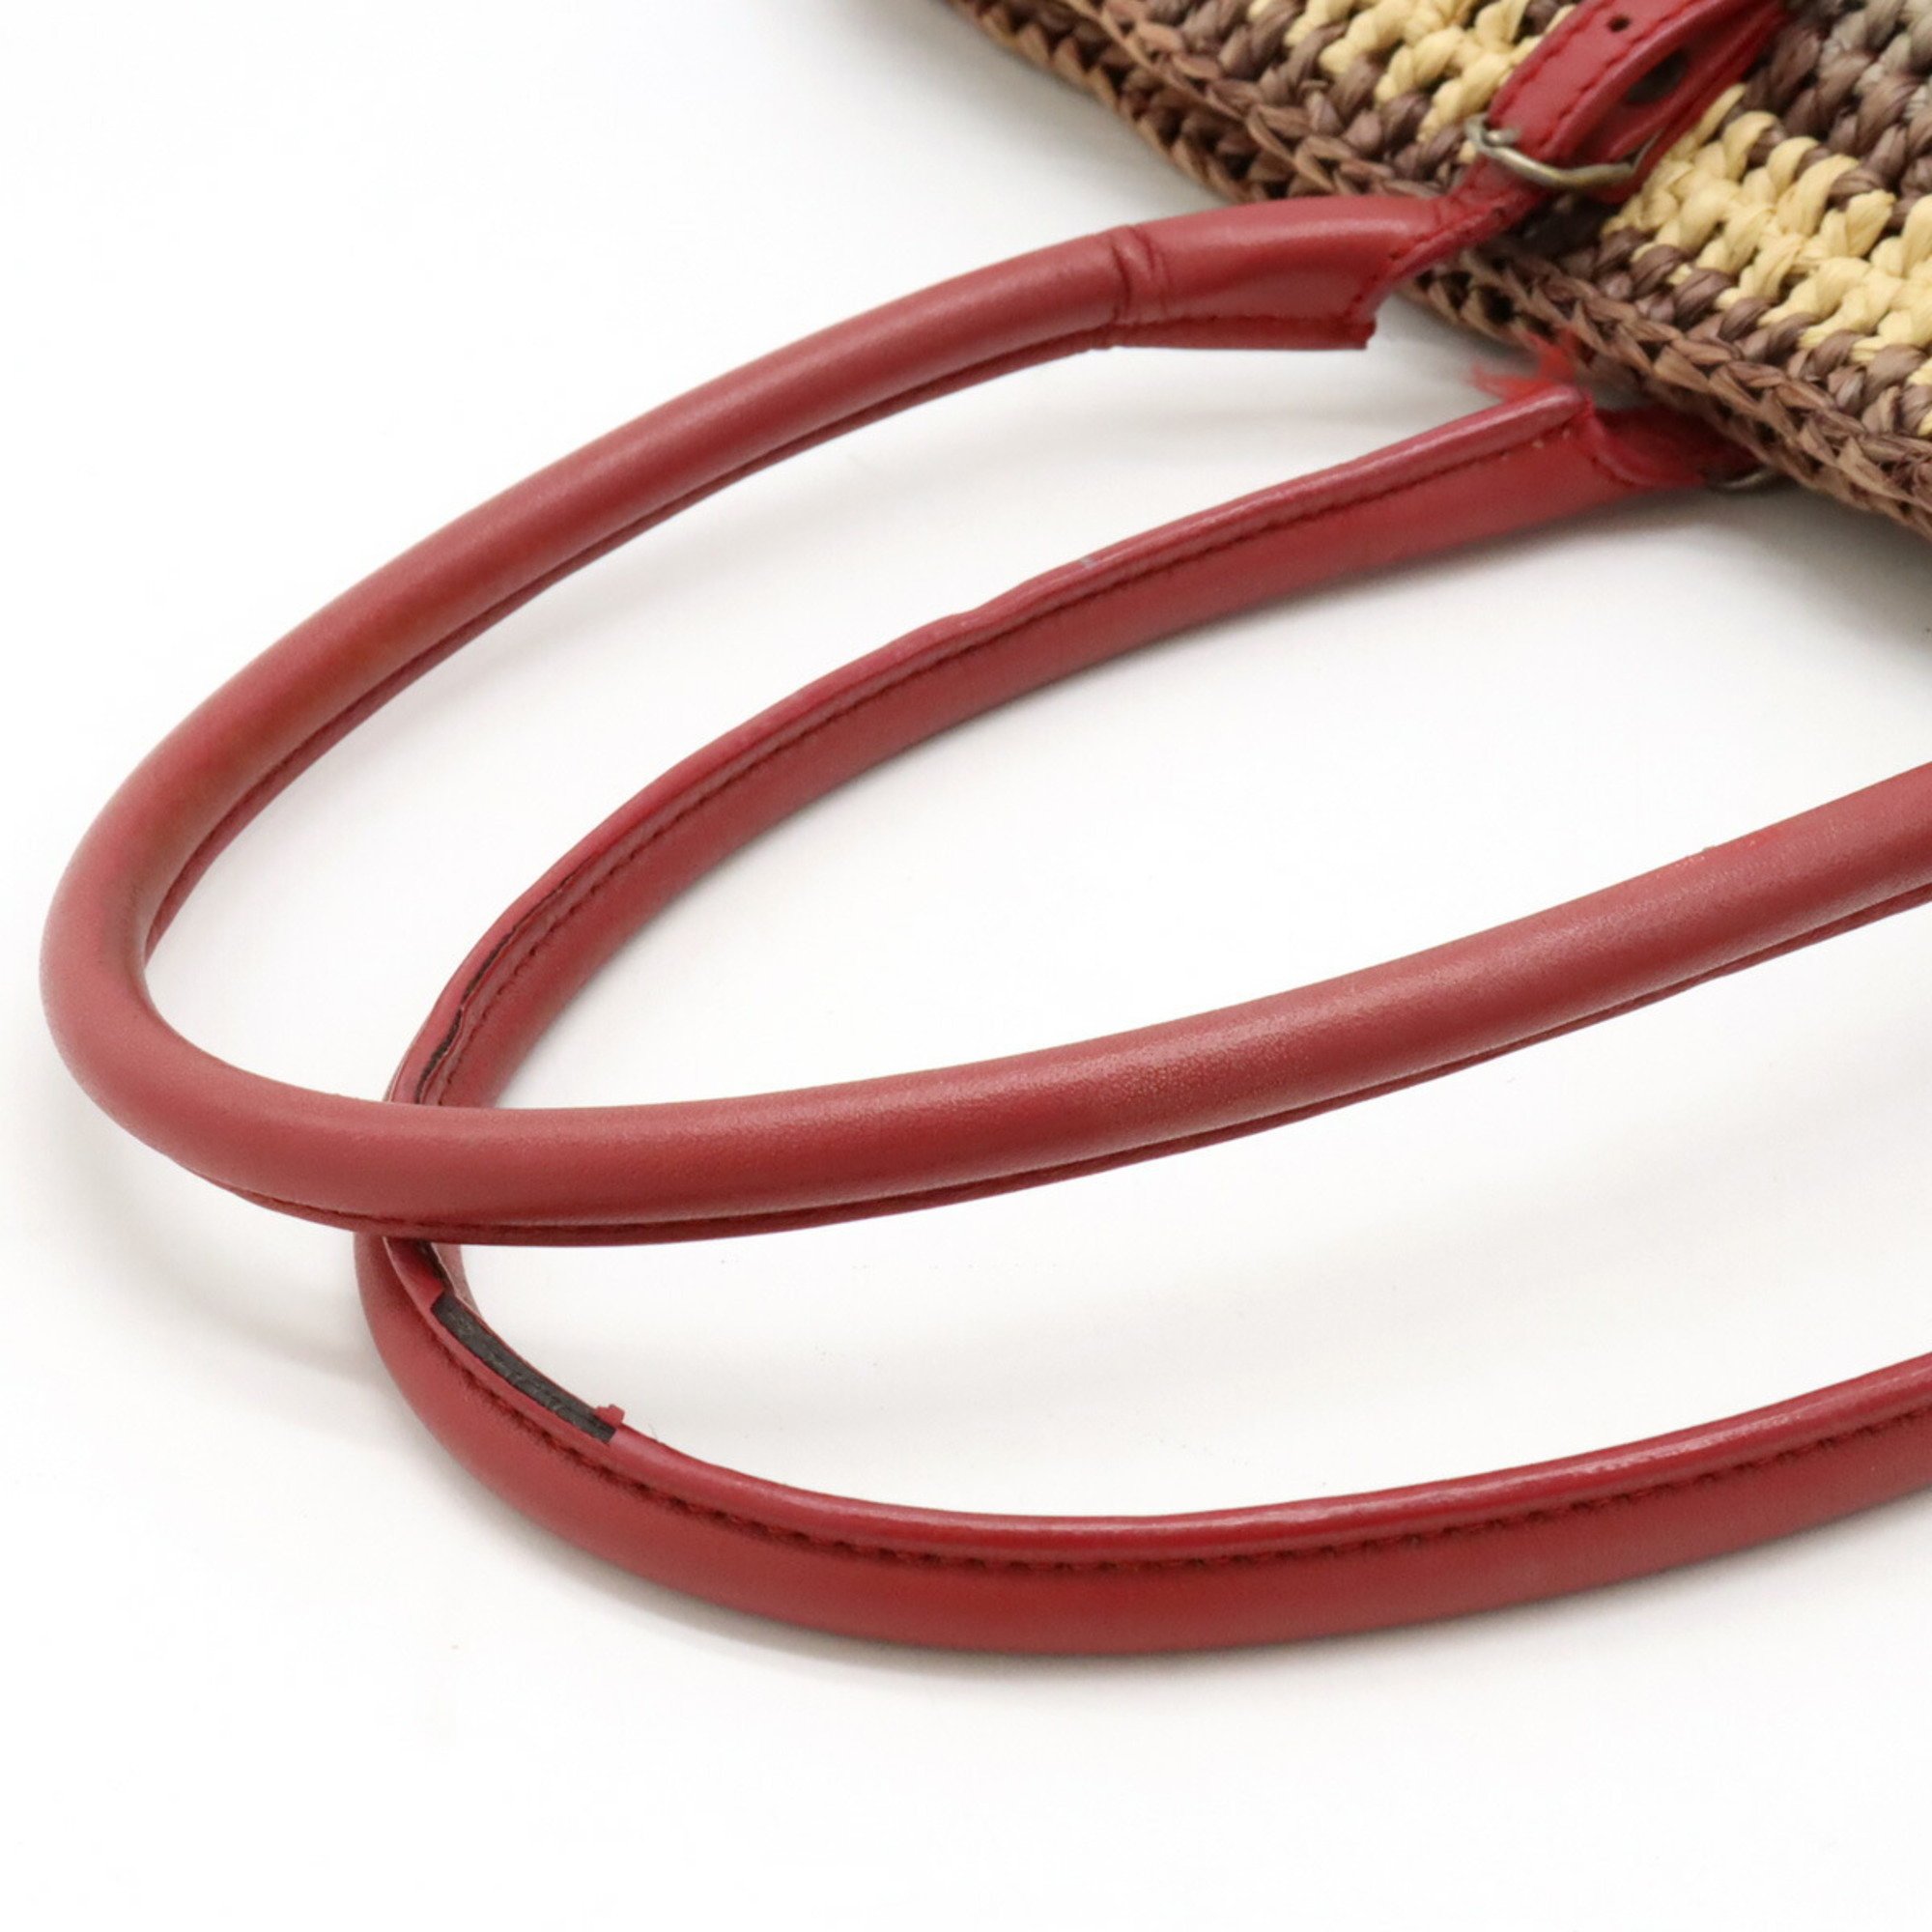 BALENCIAGA Basket bag, tote handbag, raffia, straw, leather, multicolor, red, 286370